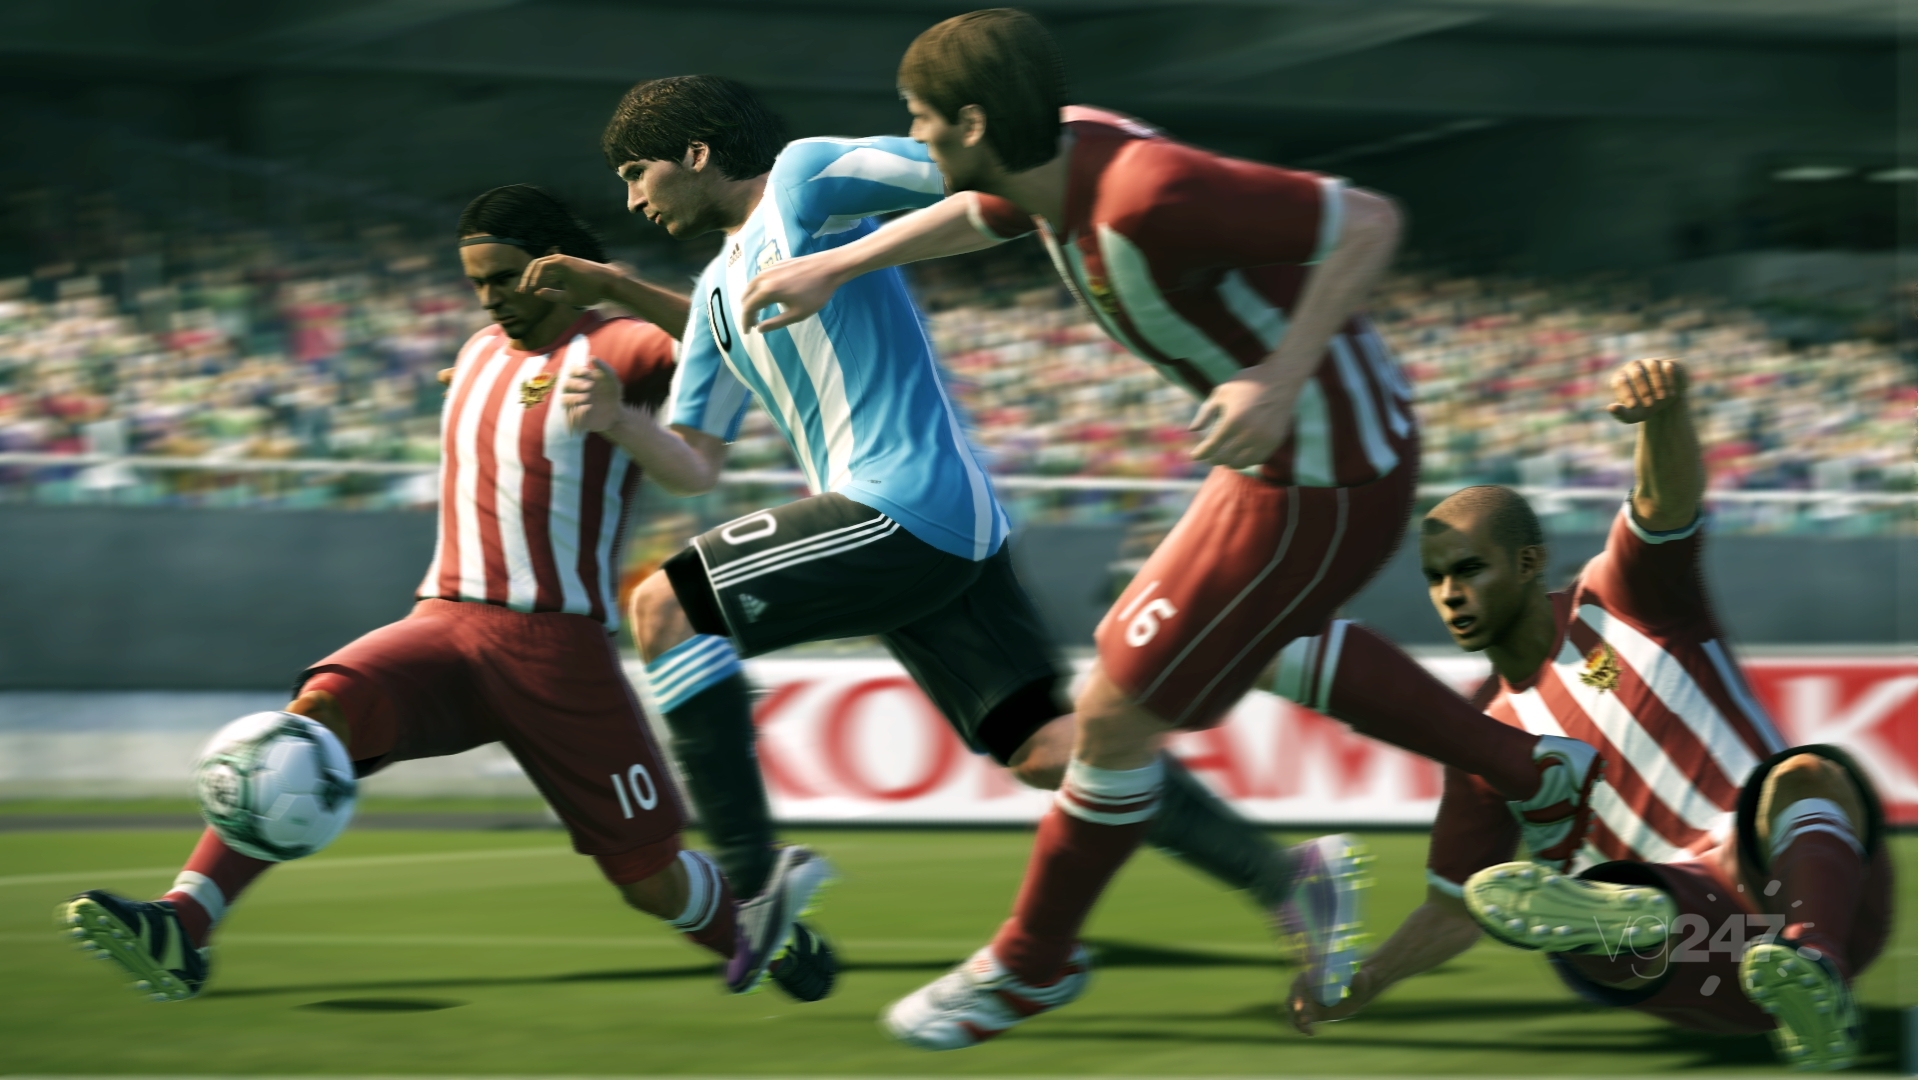 Games pro 11. Pro Evolution Soccer 2011. PES 2011 ps3. Pro Evolution Soccer 2011 3d. Про Эволюшн СОККЕР 2011.